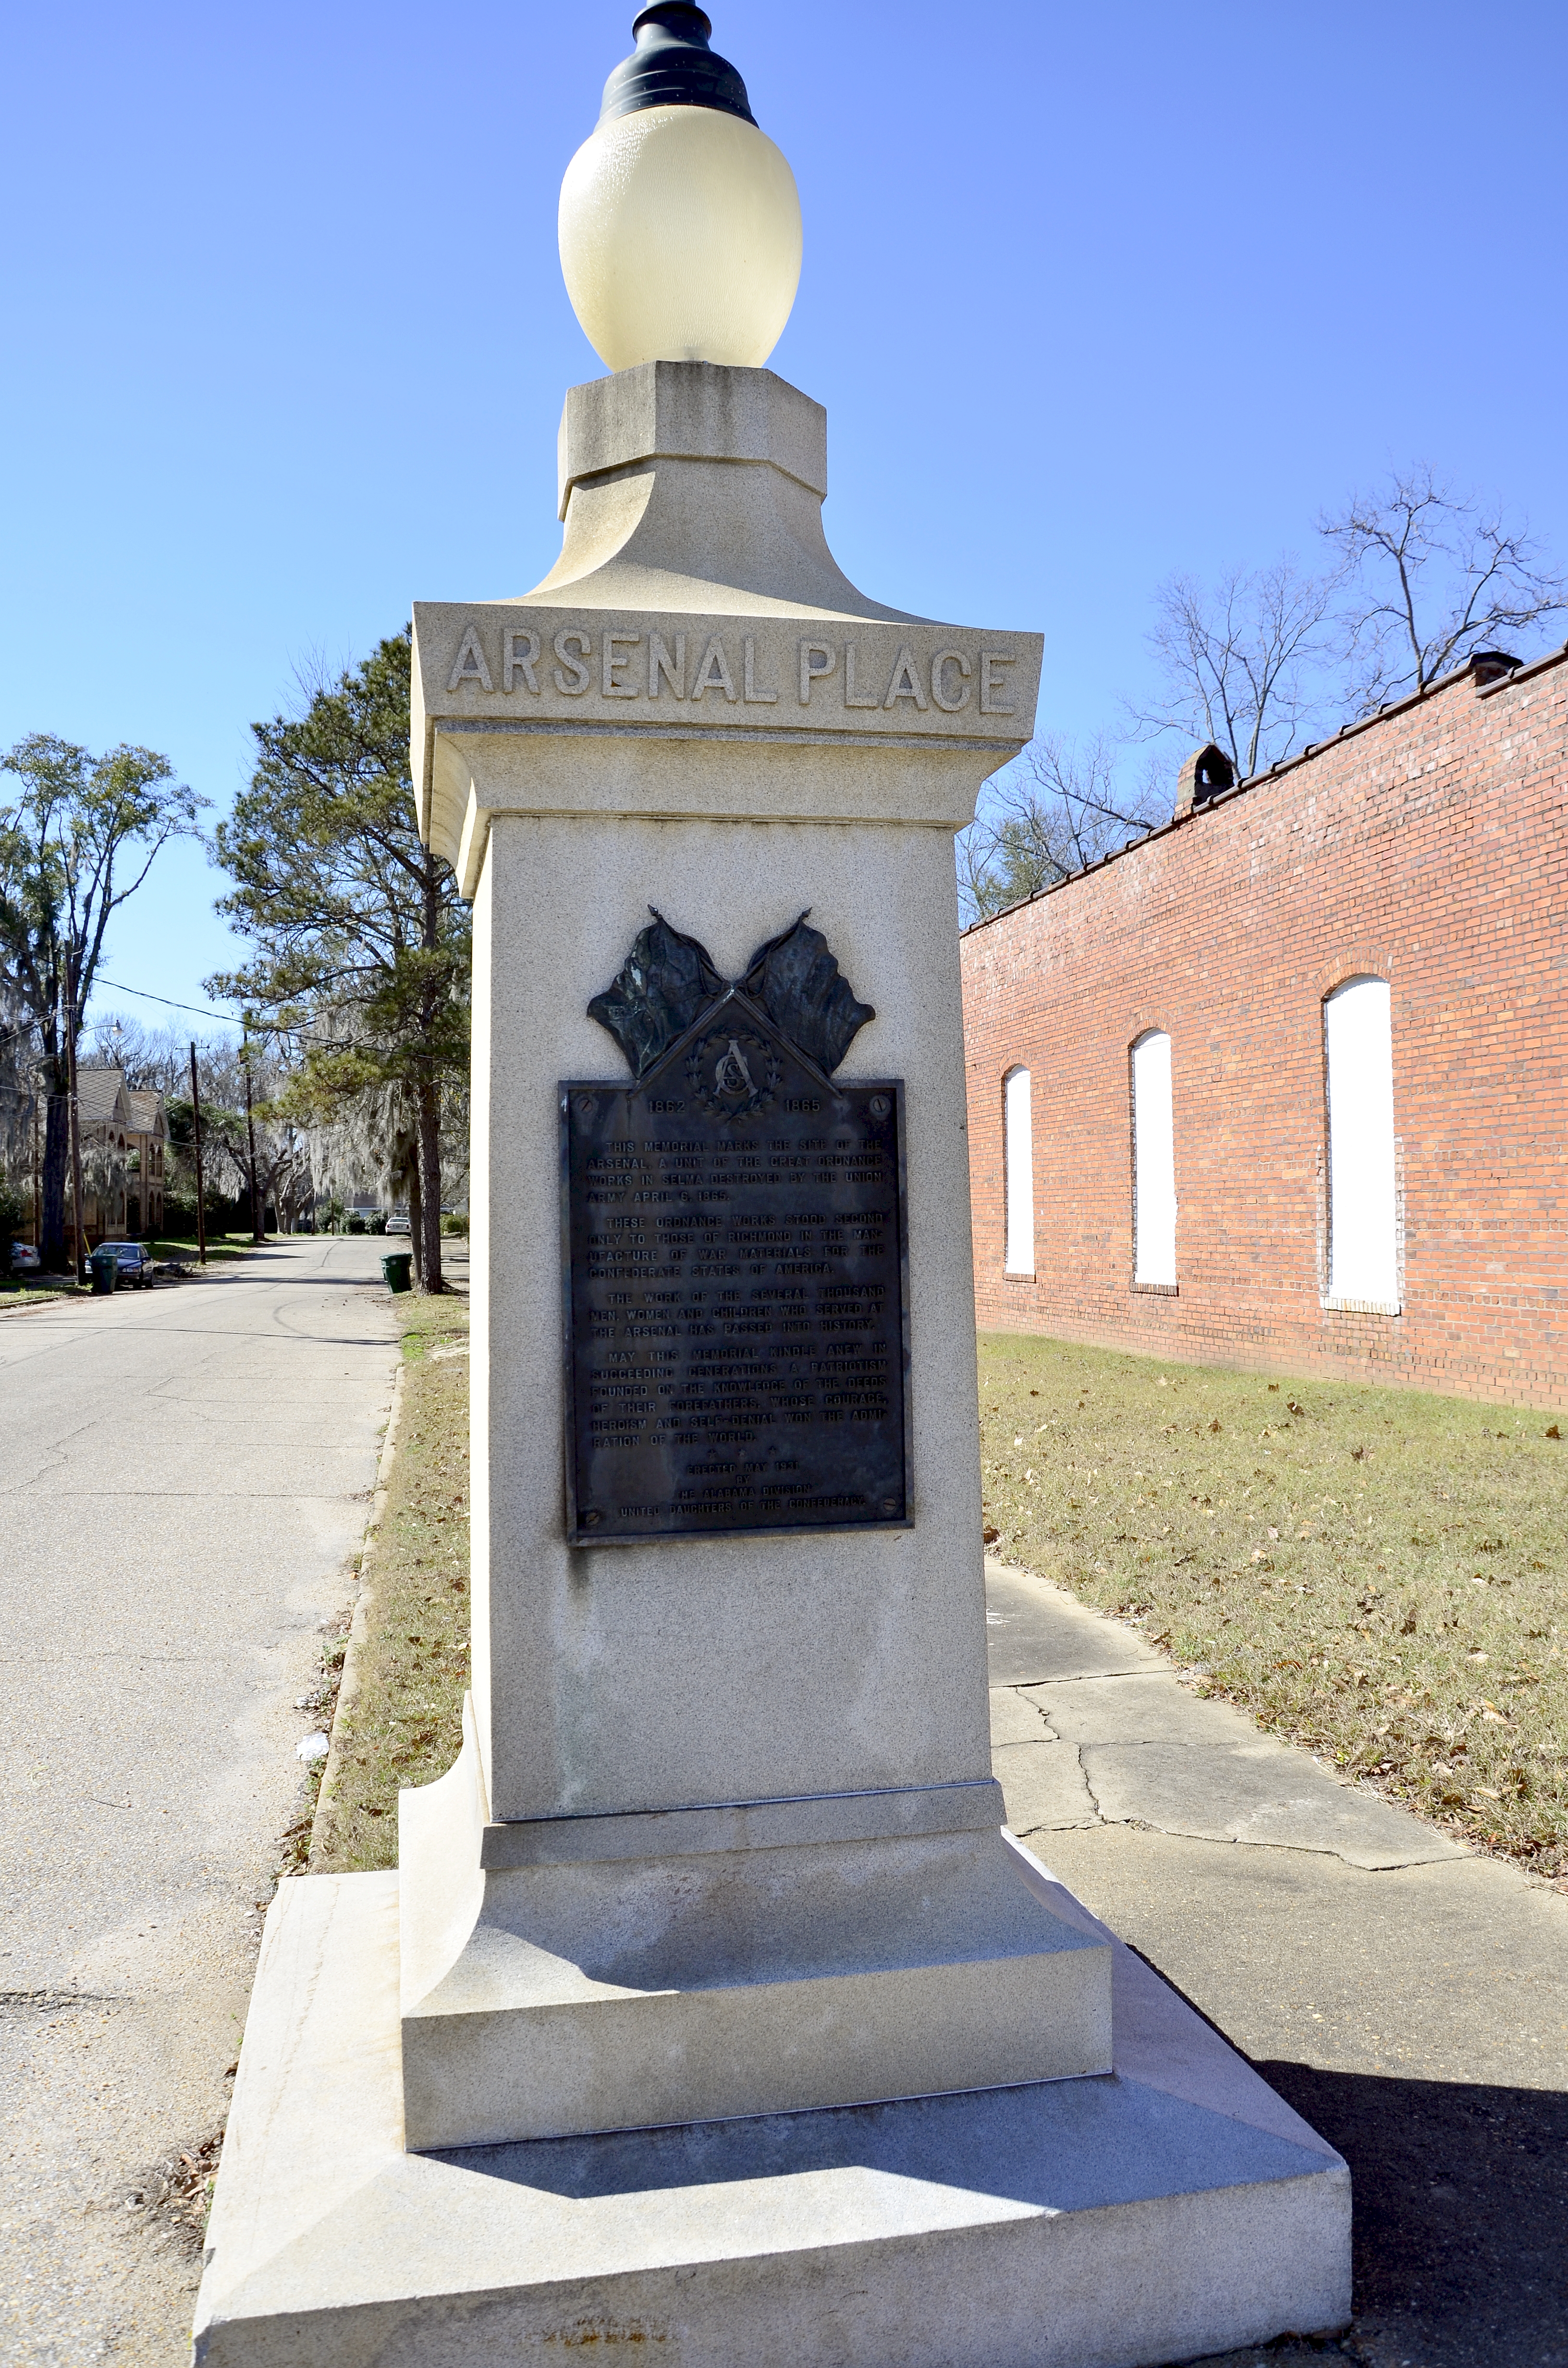 File:Arsenal Place memorial, Selma, Alabama.jpg - Wikimedia Commons